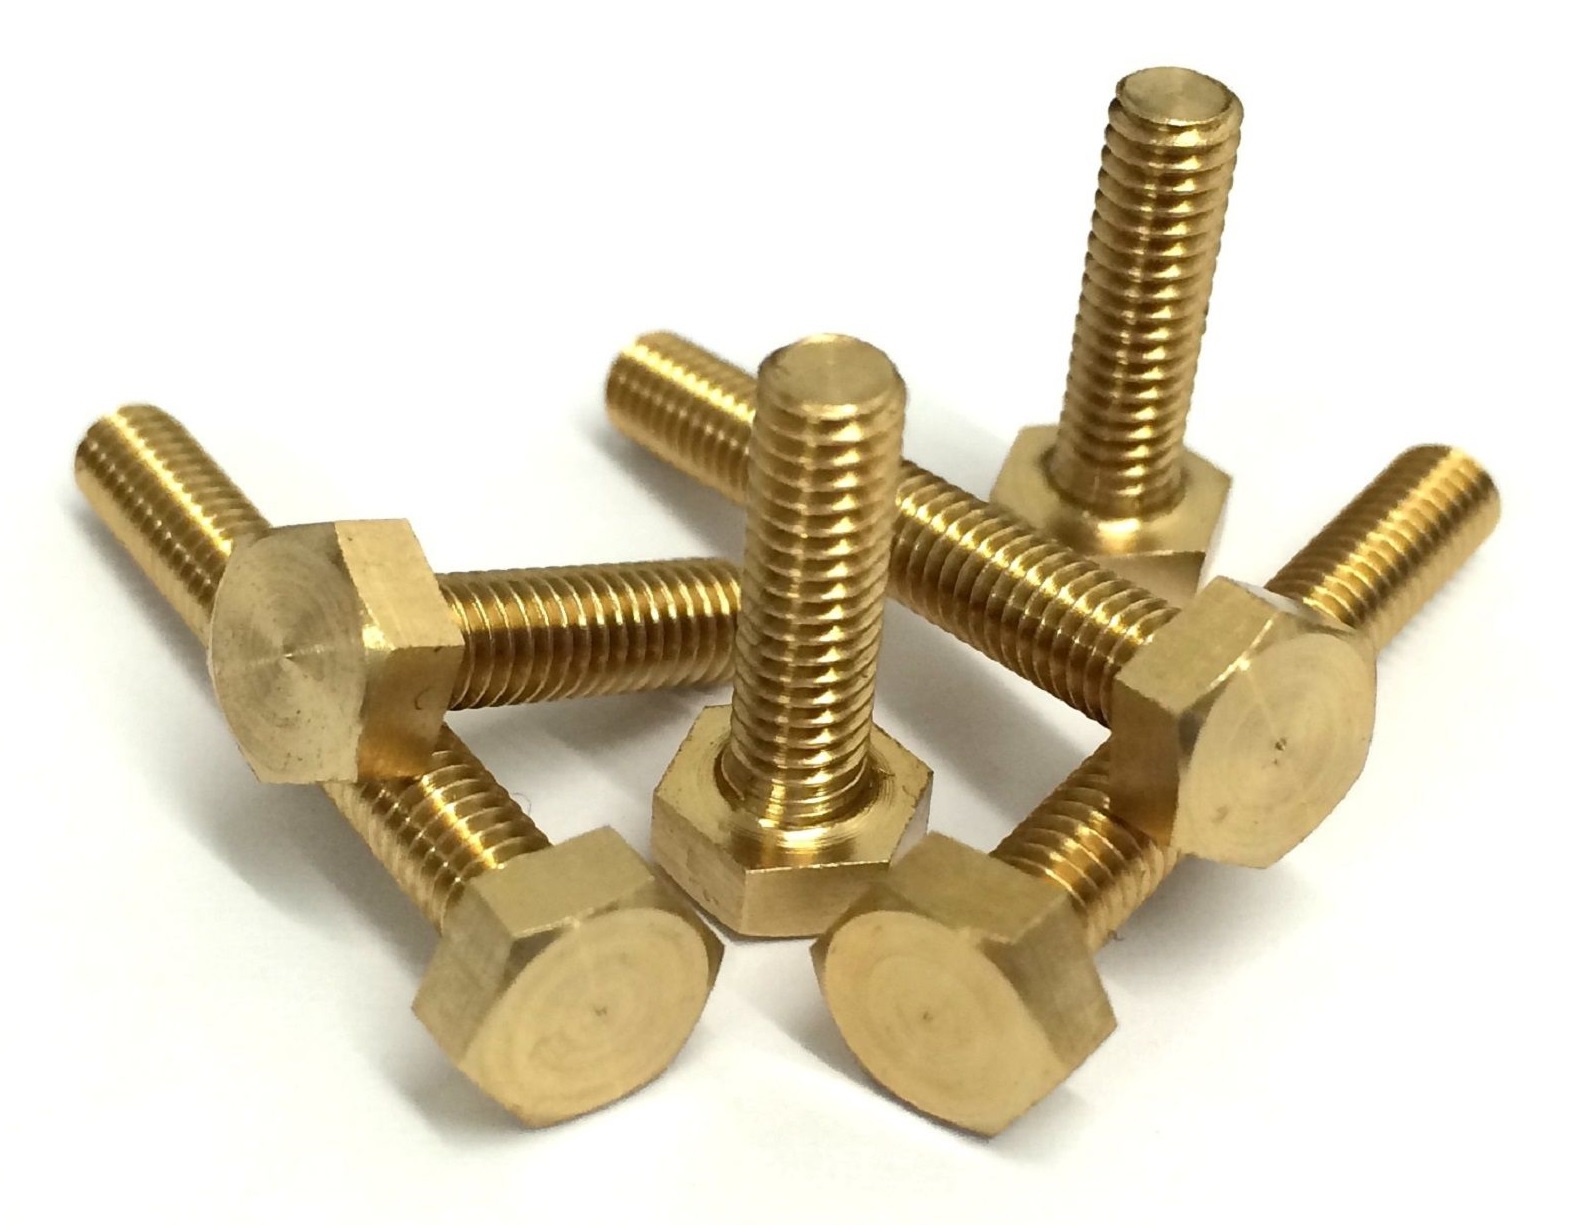 https://bullionpipe.com/wp-content/uploads/2020/09/brass-fasteners-manufacturer.jpg